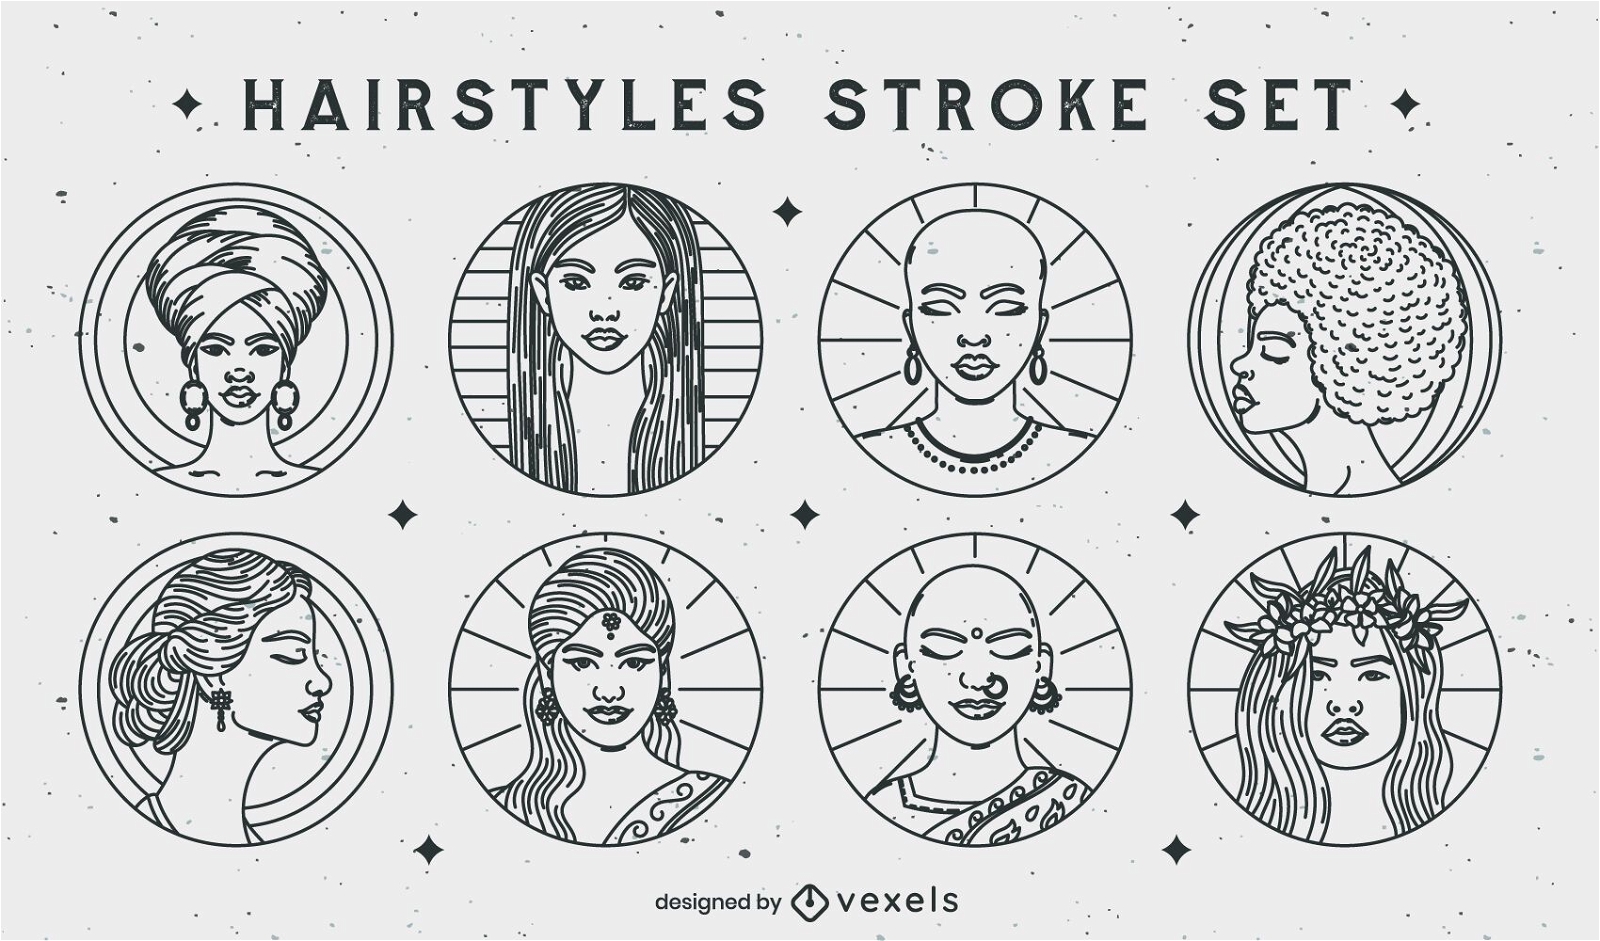 Hairstyles stroke set of badges